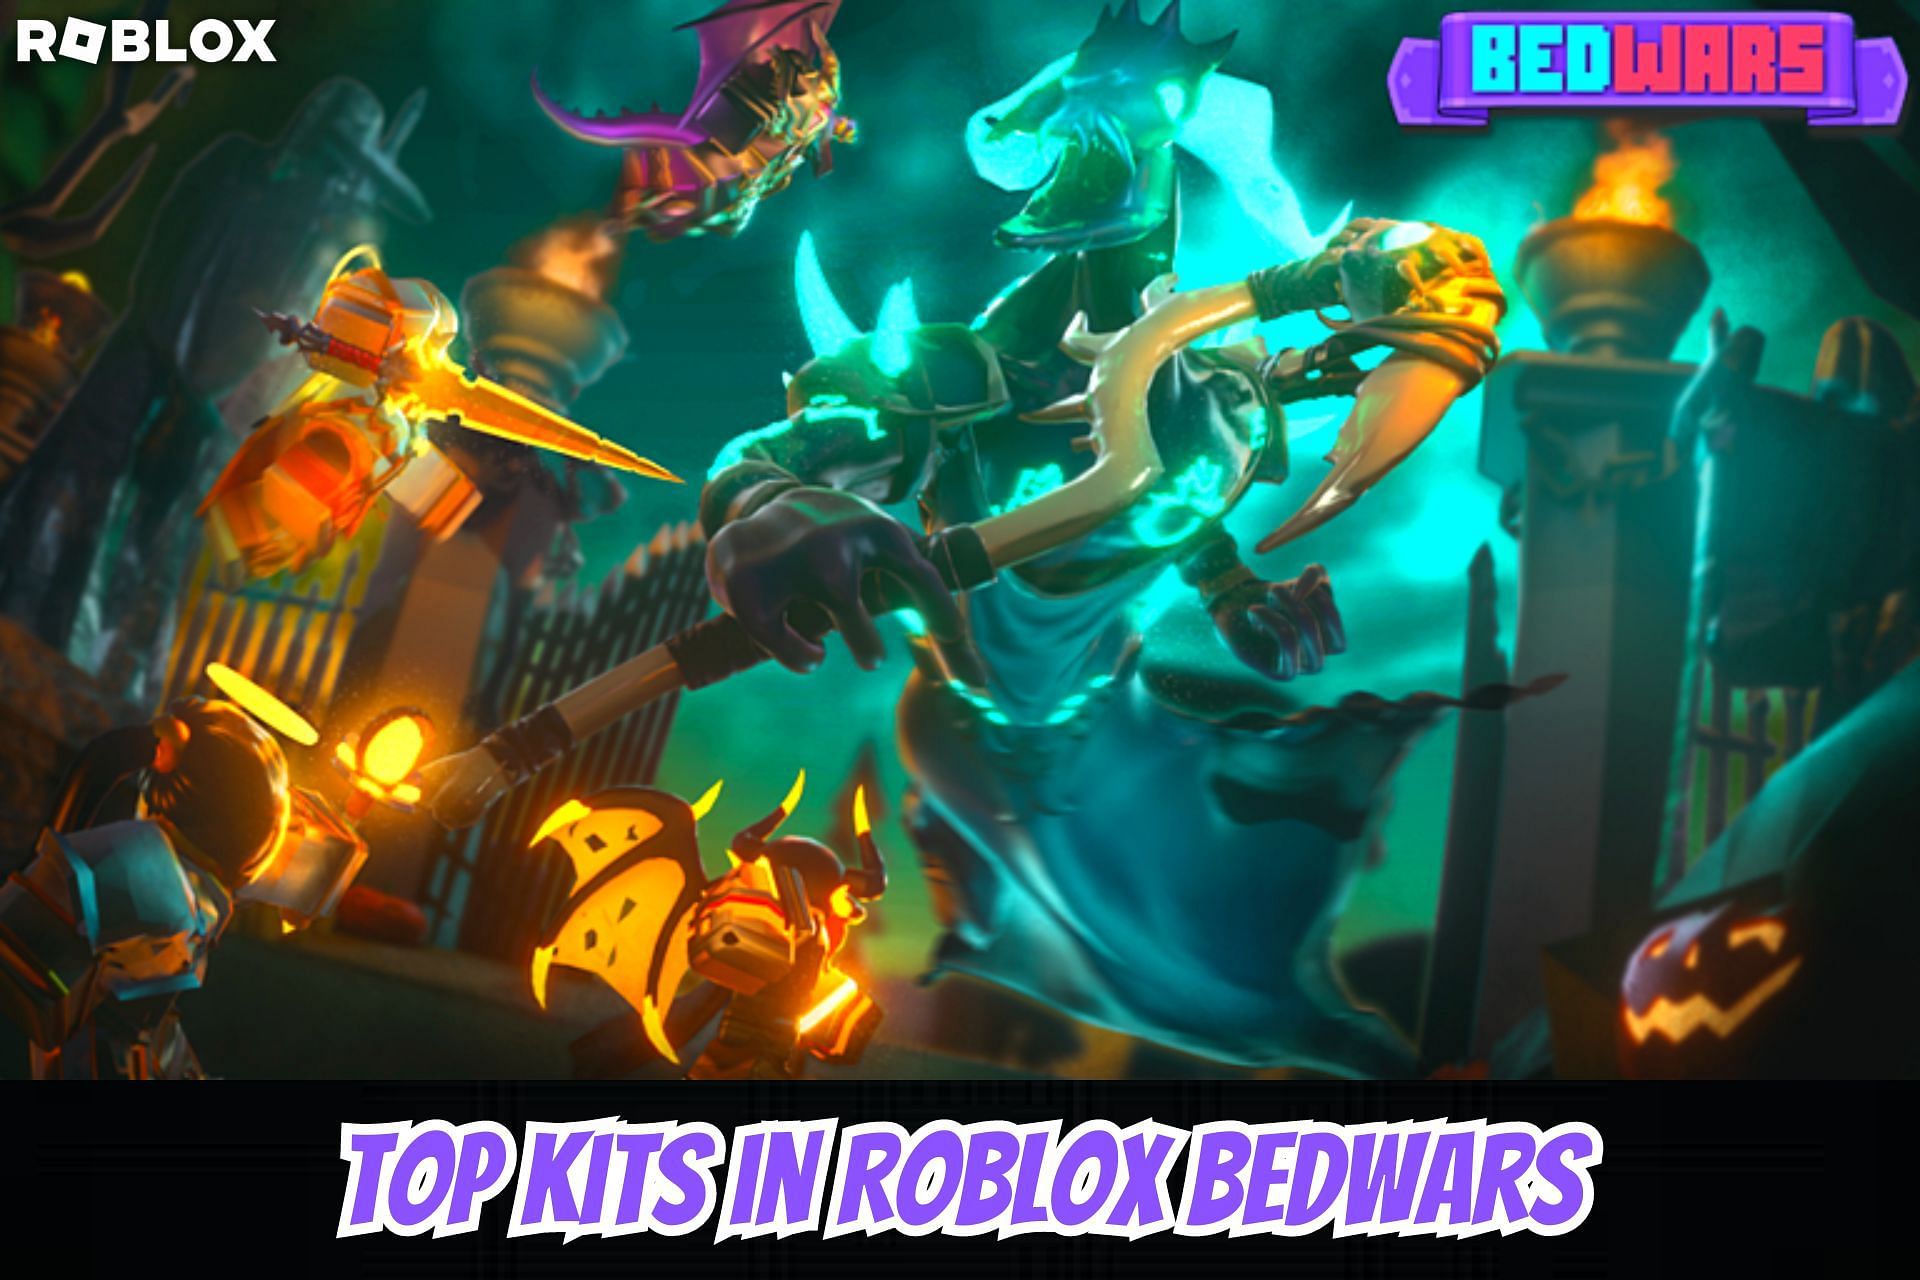 5 best Kits in Roblox Bedwars